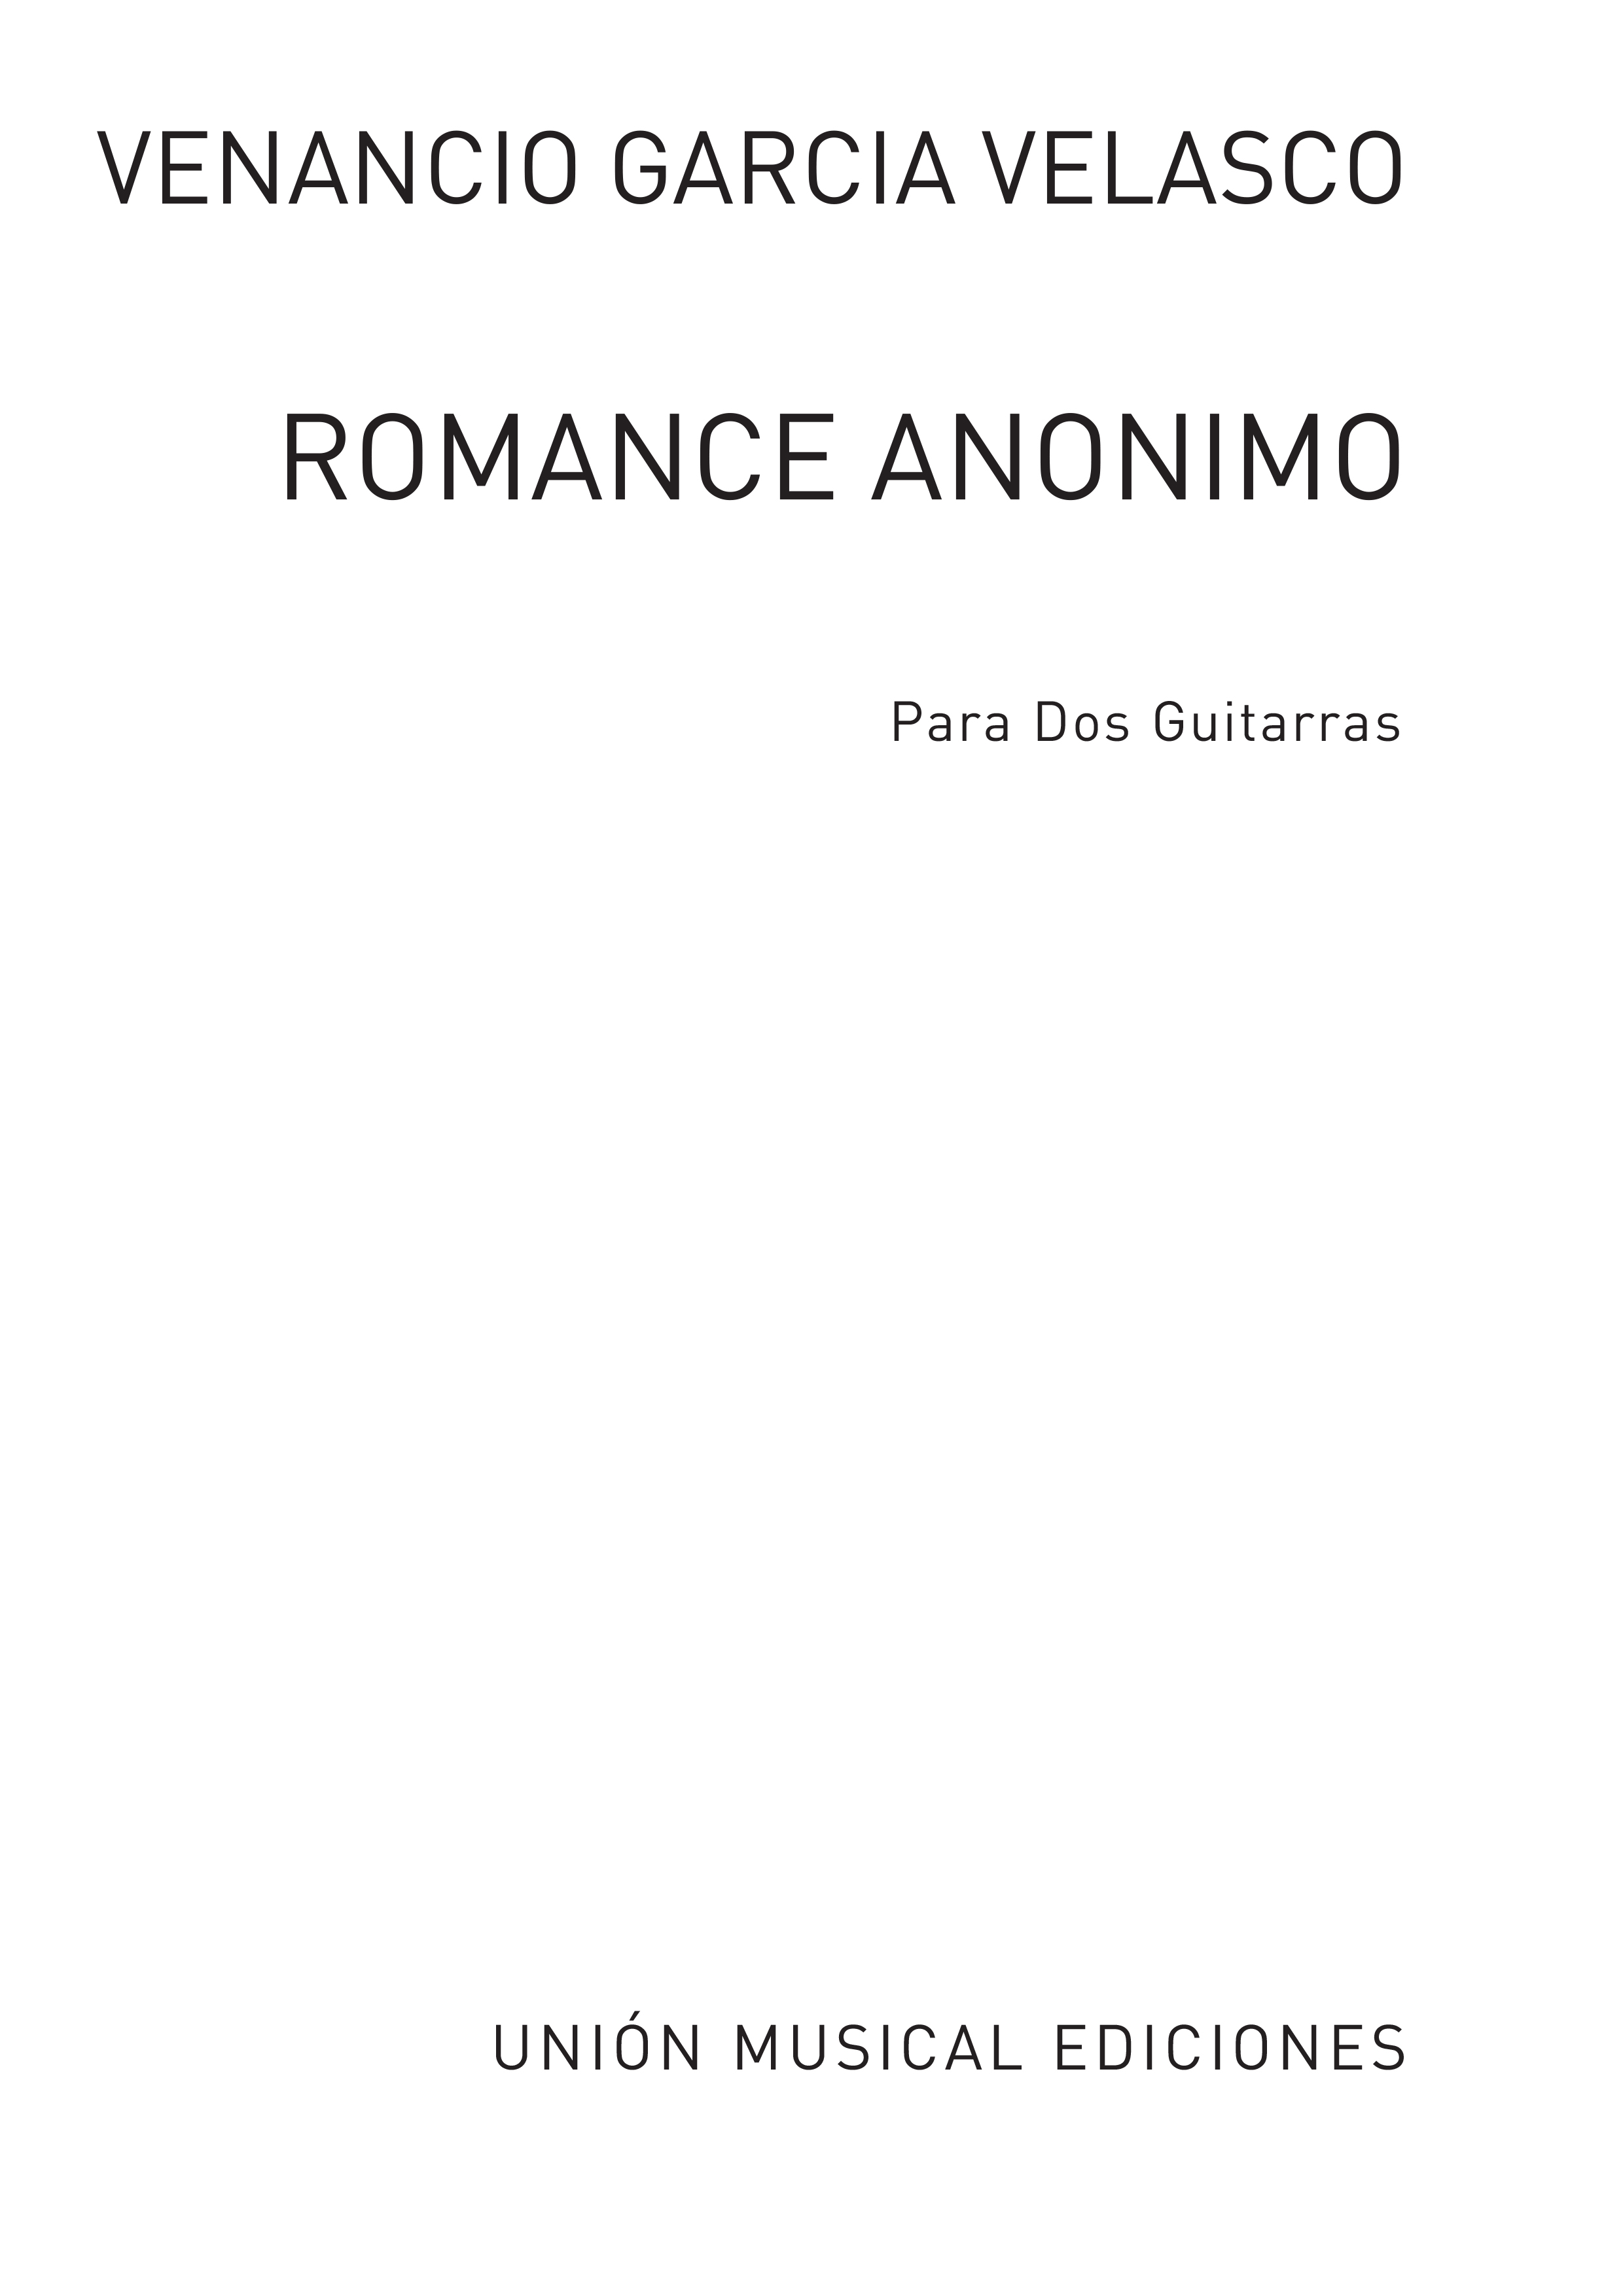 Venancio Garcia Velasco: Romance Anonimo: Guitar Duet: Single Sheet